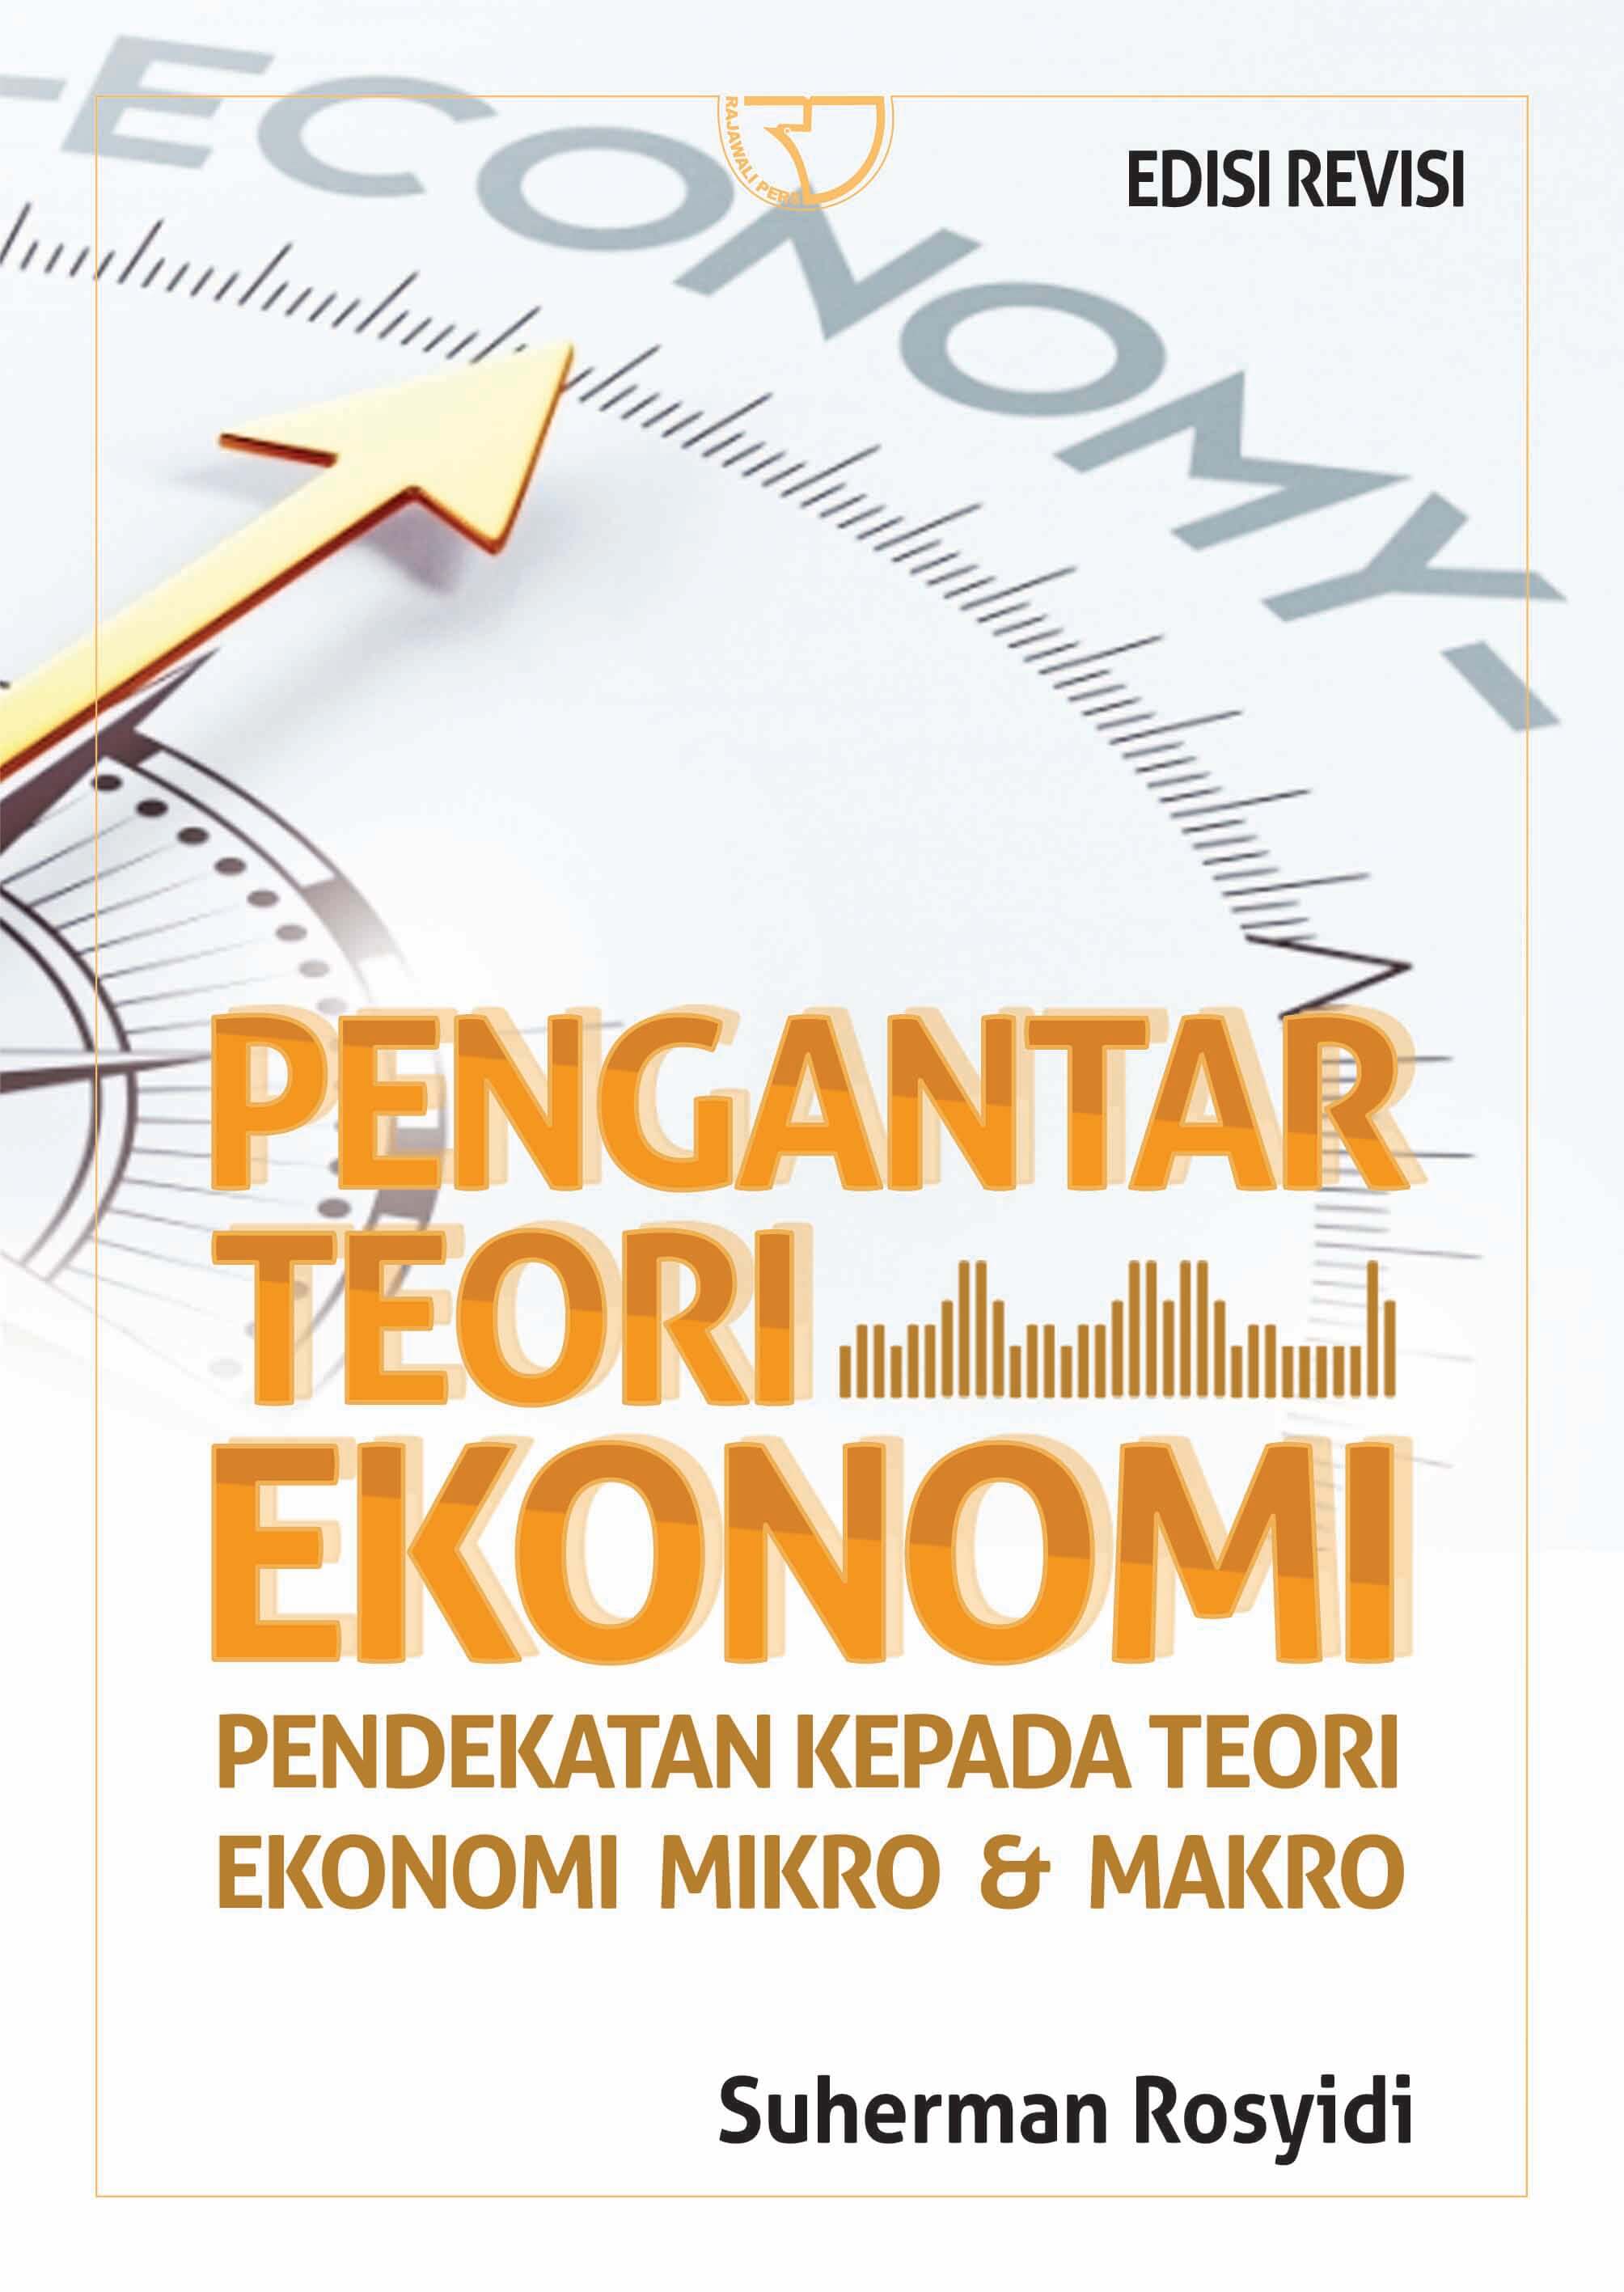 Download Ebook Pengantar Ekonomi Mikro Sadono 25